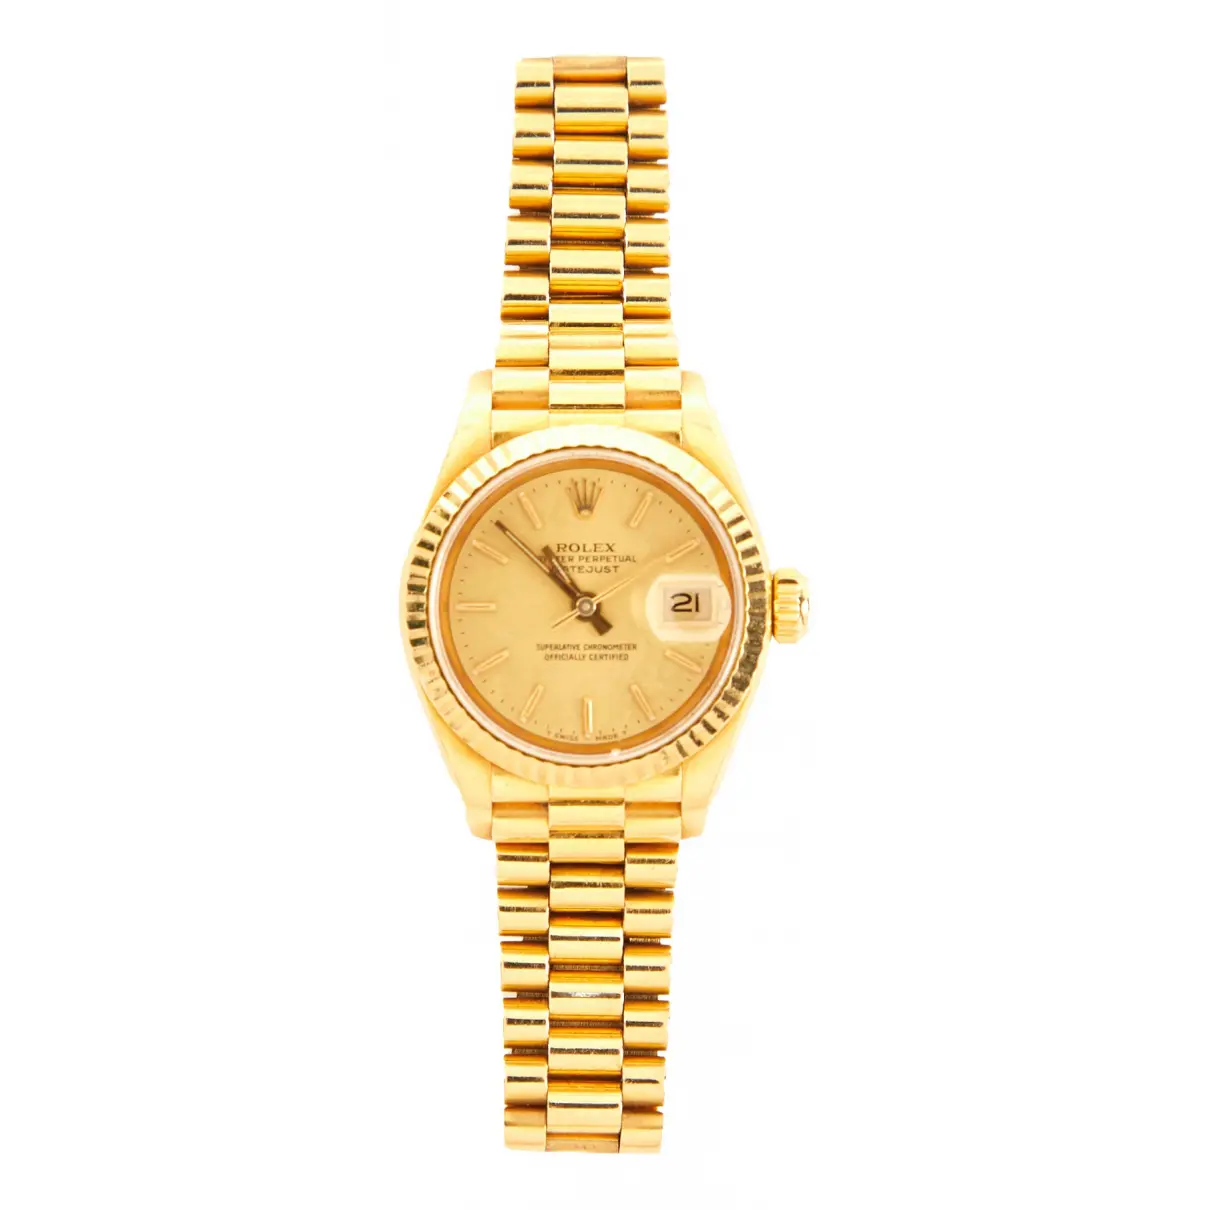 Lady DateJust 26mm pink gold watch Rolex